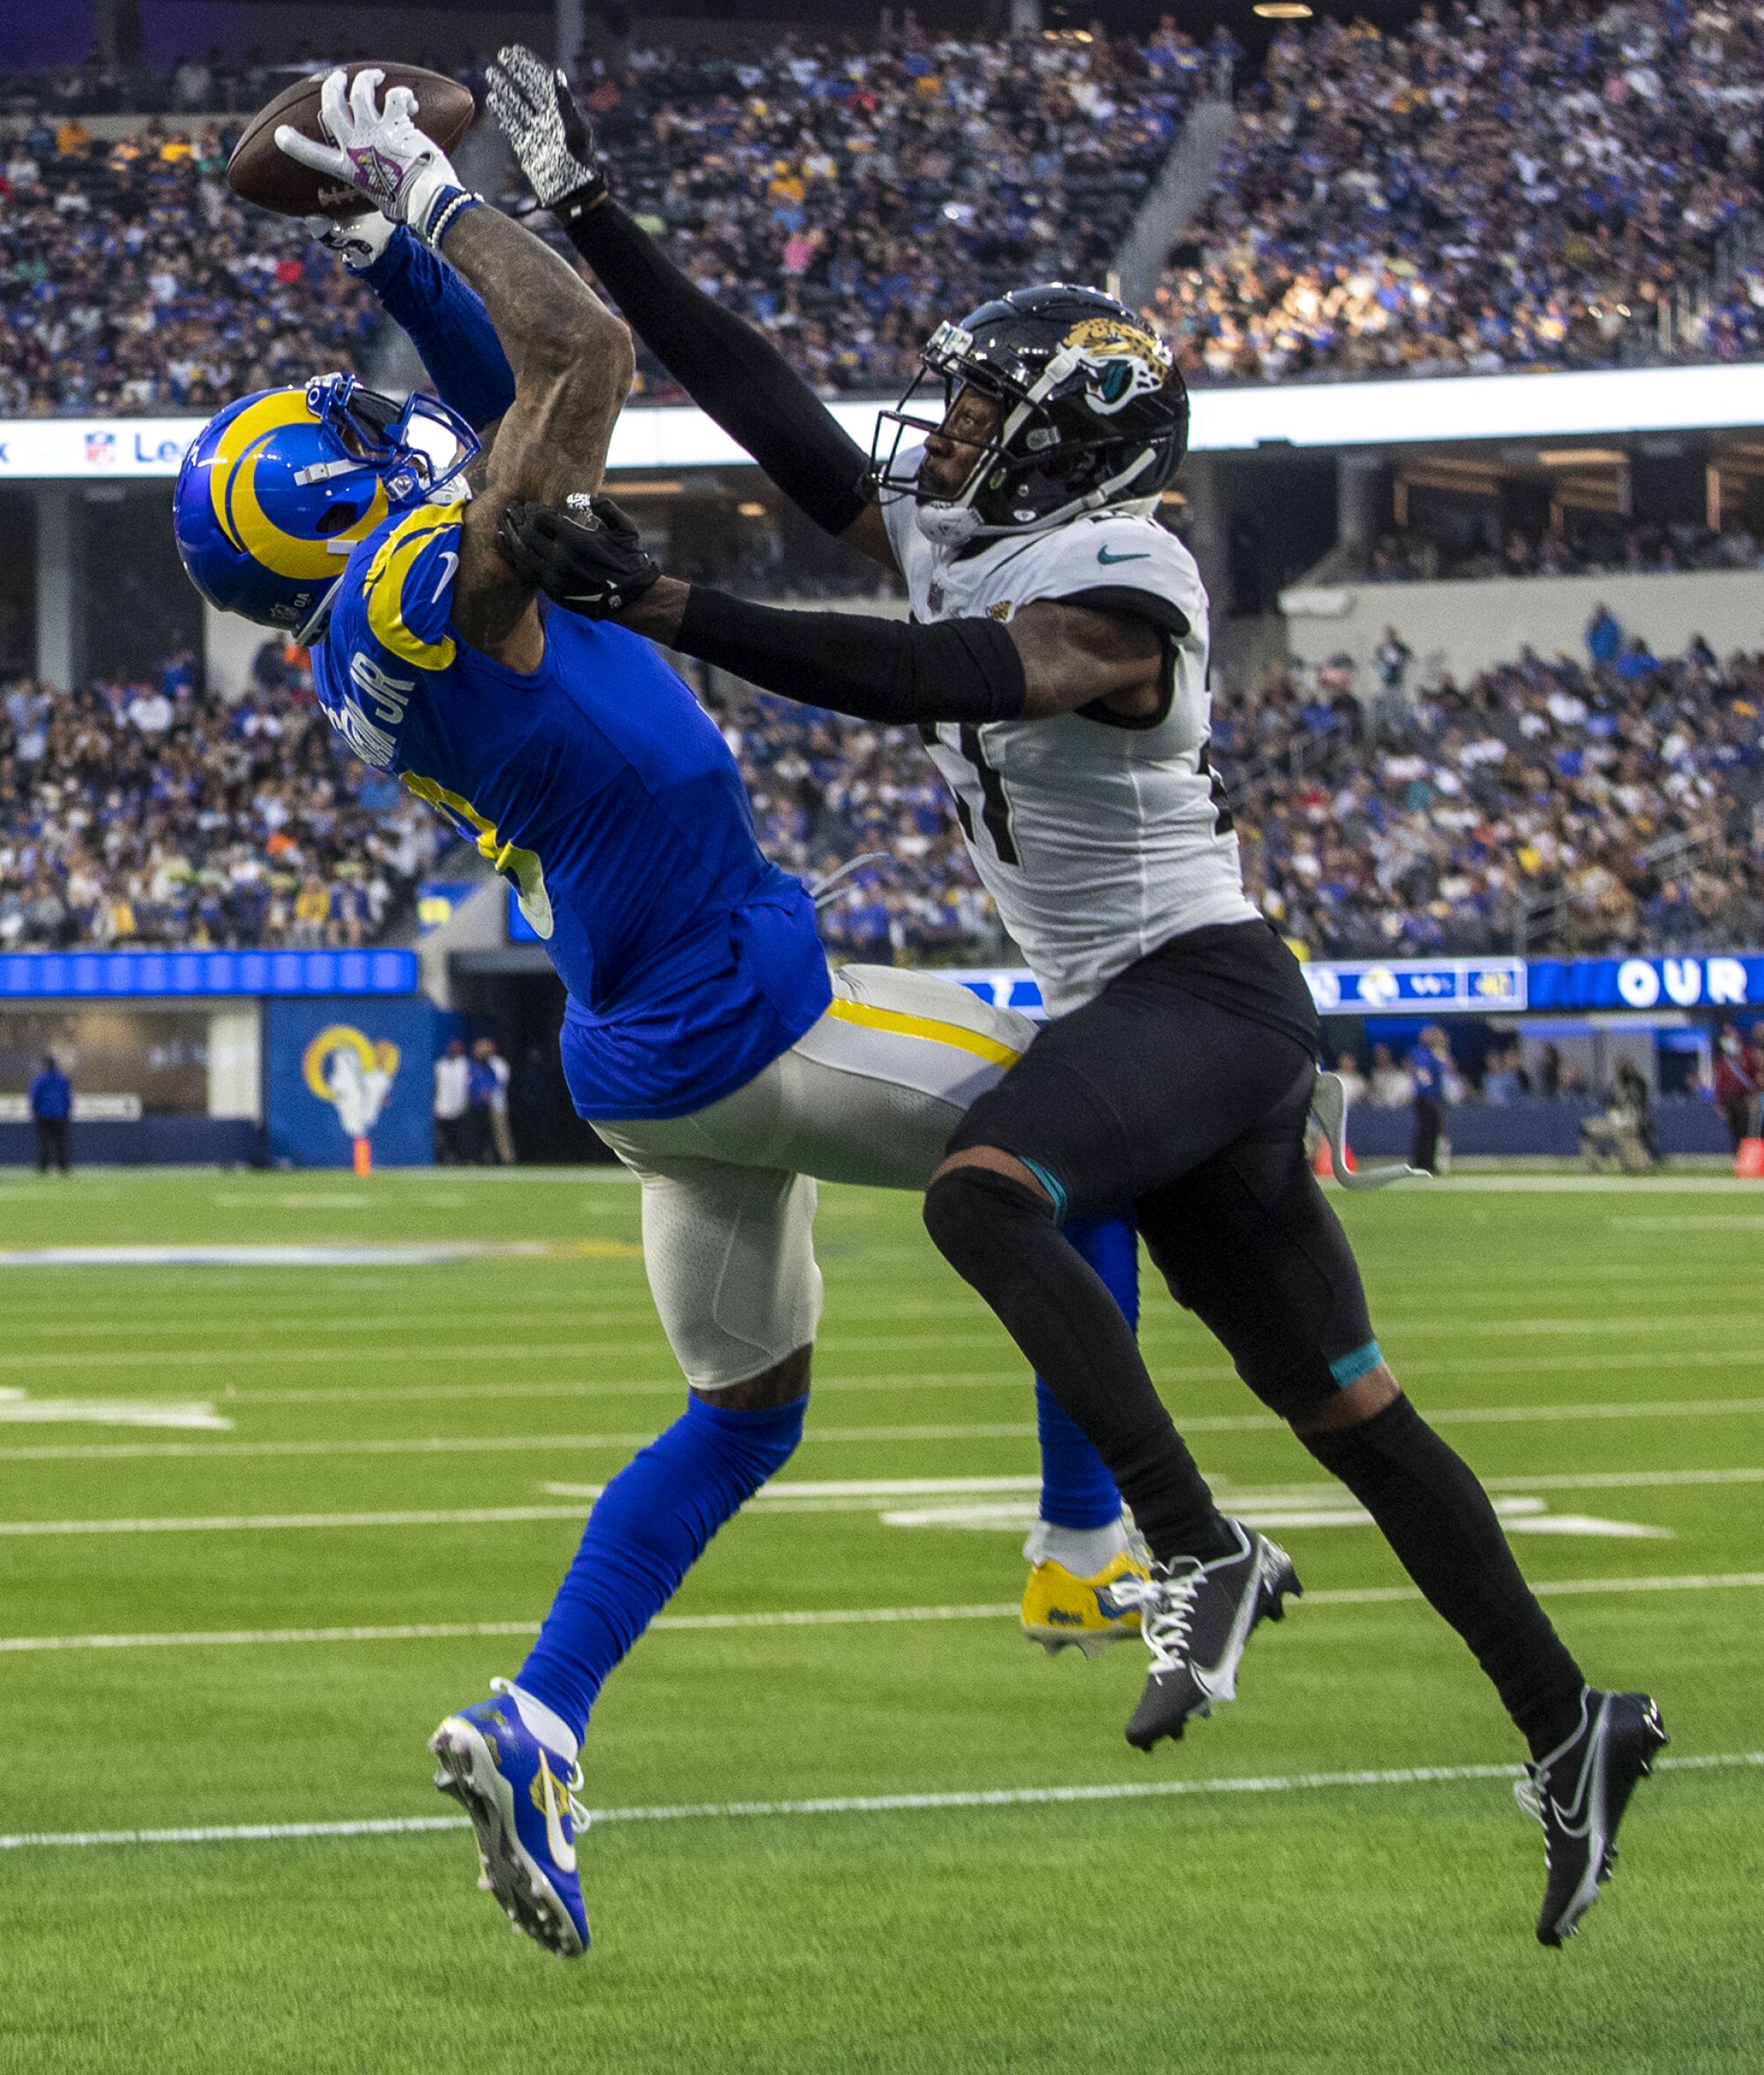 Rams receiver Odell Beckham Jr. hauls in a second half touchdown catch over Jaguars cornerback Nevin Lawson.